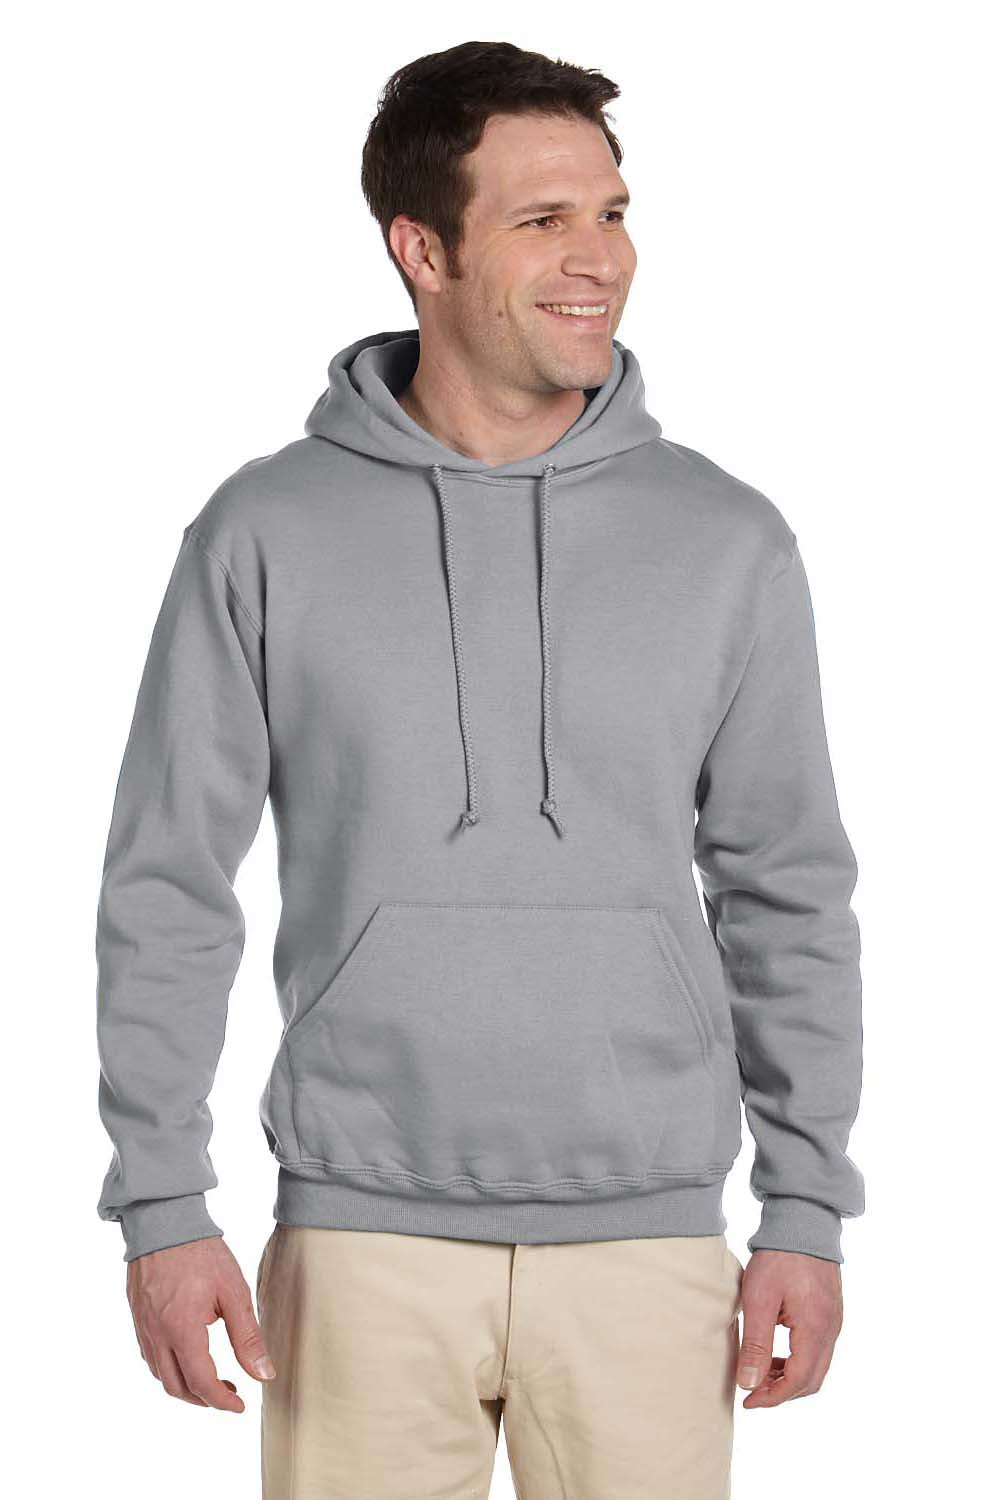 Jerzees 4997 Mens Super Sweats NuBlend Fleece Hooded Sweatshirt Hoodie Oxford Grey Front